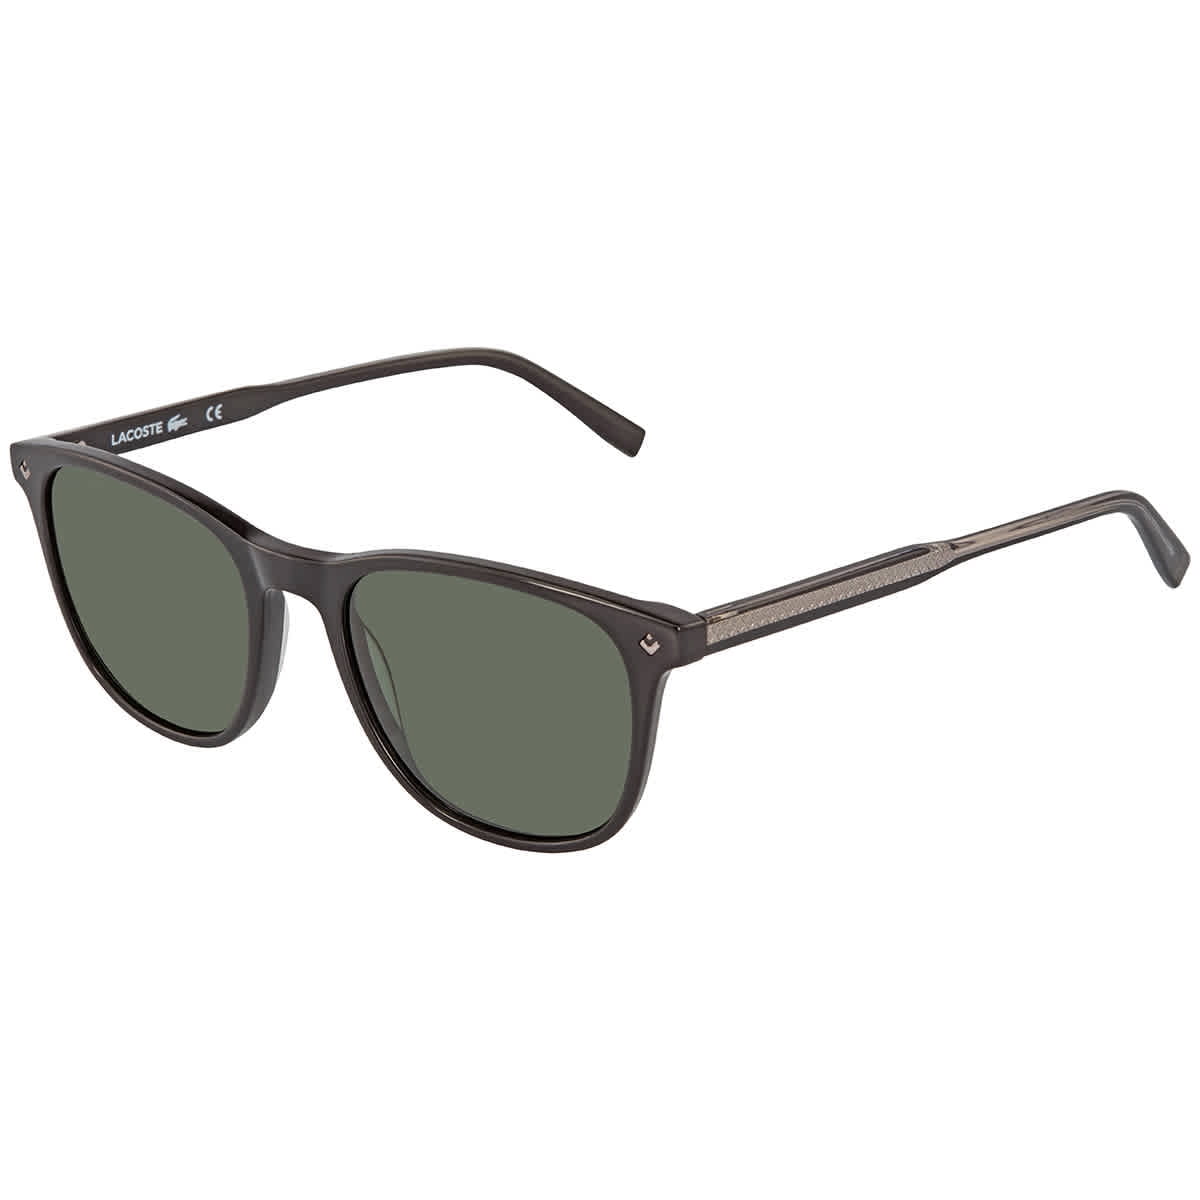 Lacoste Men's L602SNDP Sunglasses Black One Size